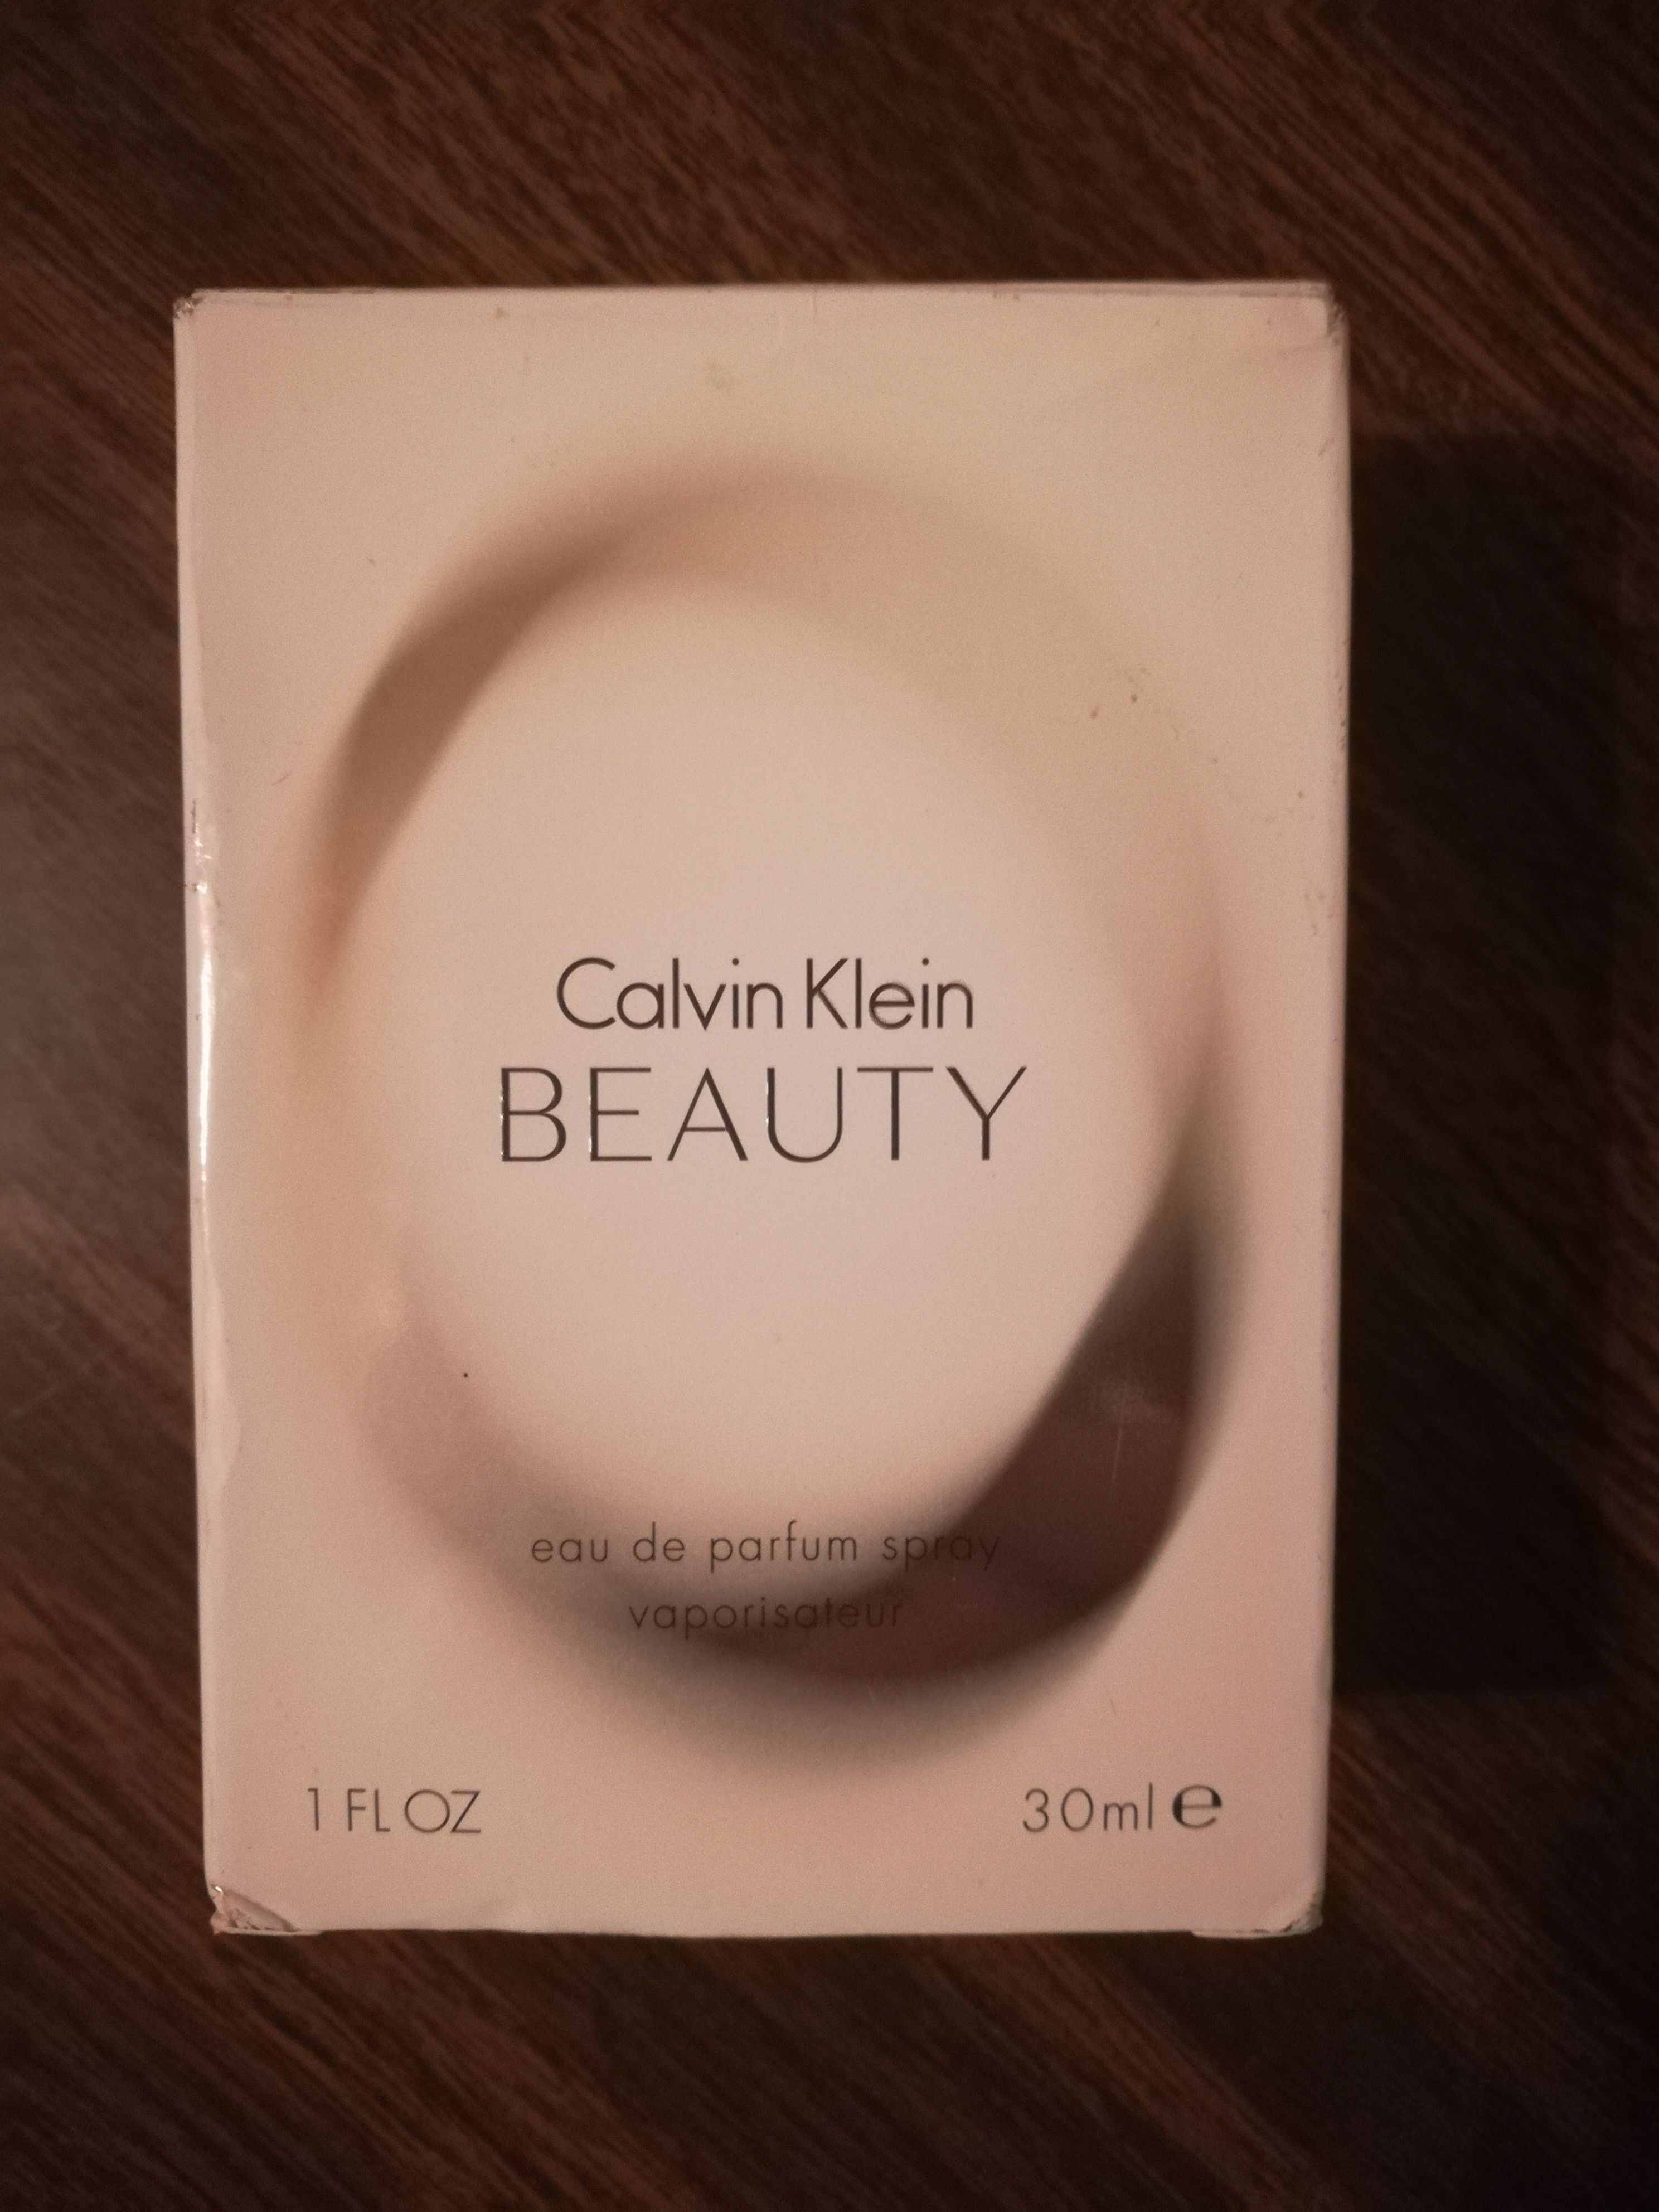 Calvin Klein "Beauty" fragrance